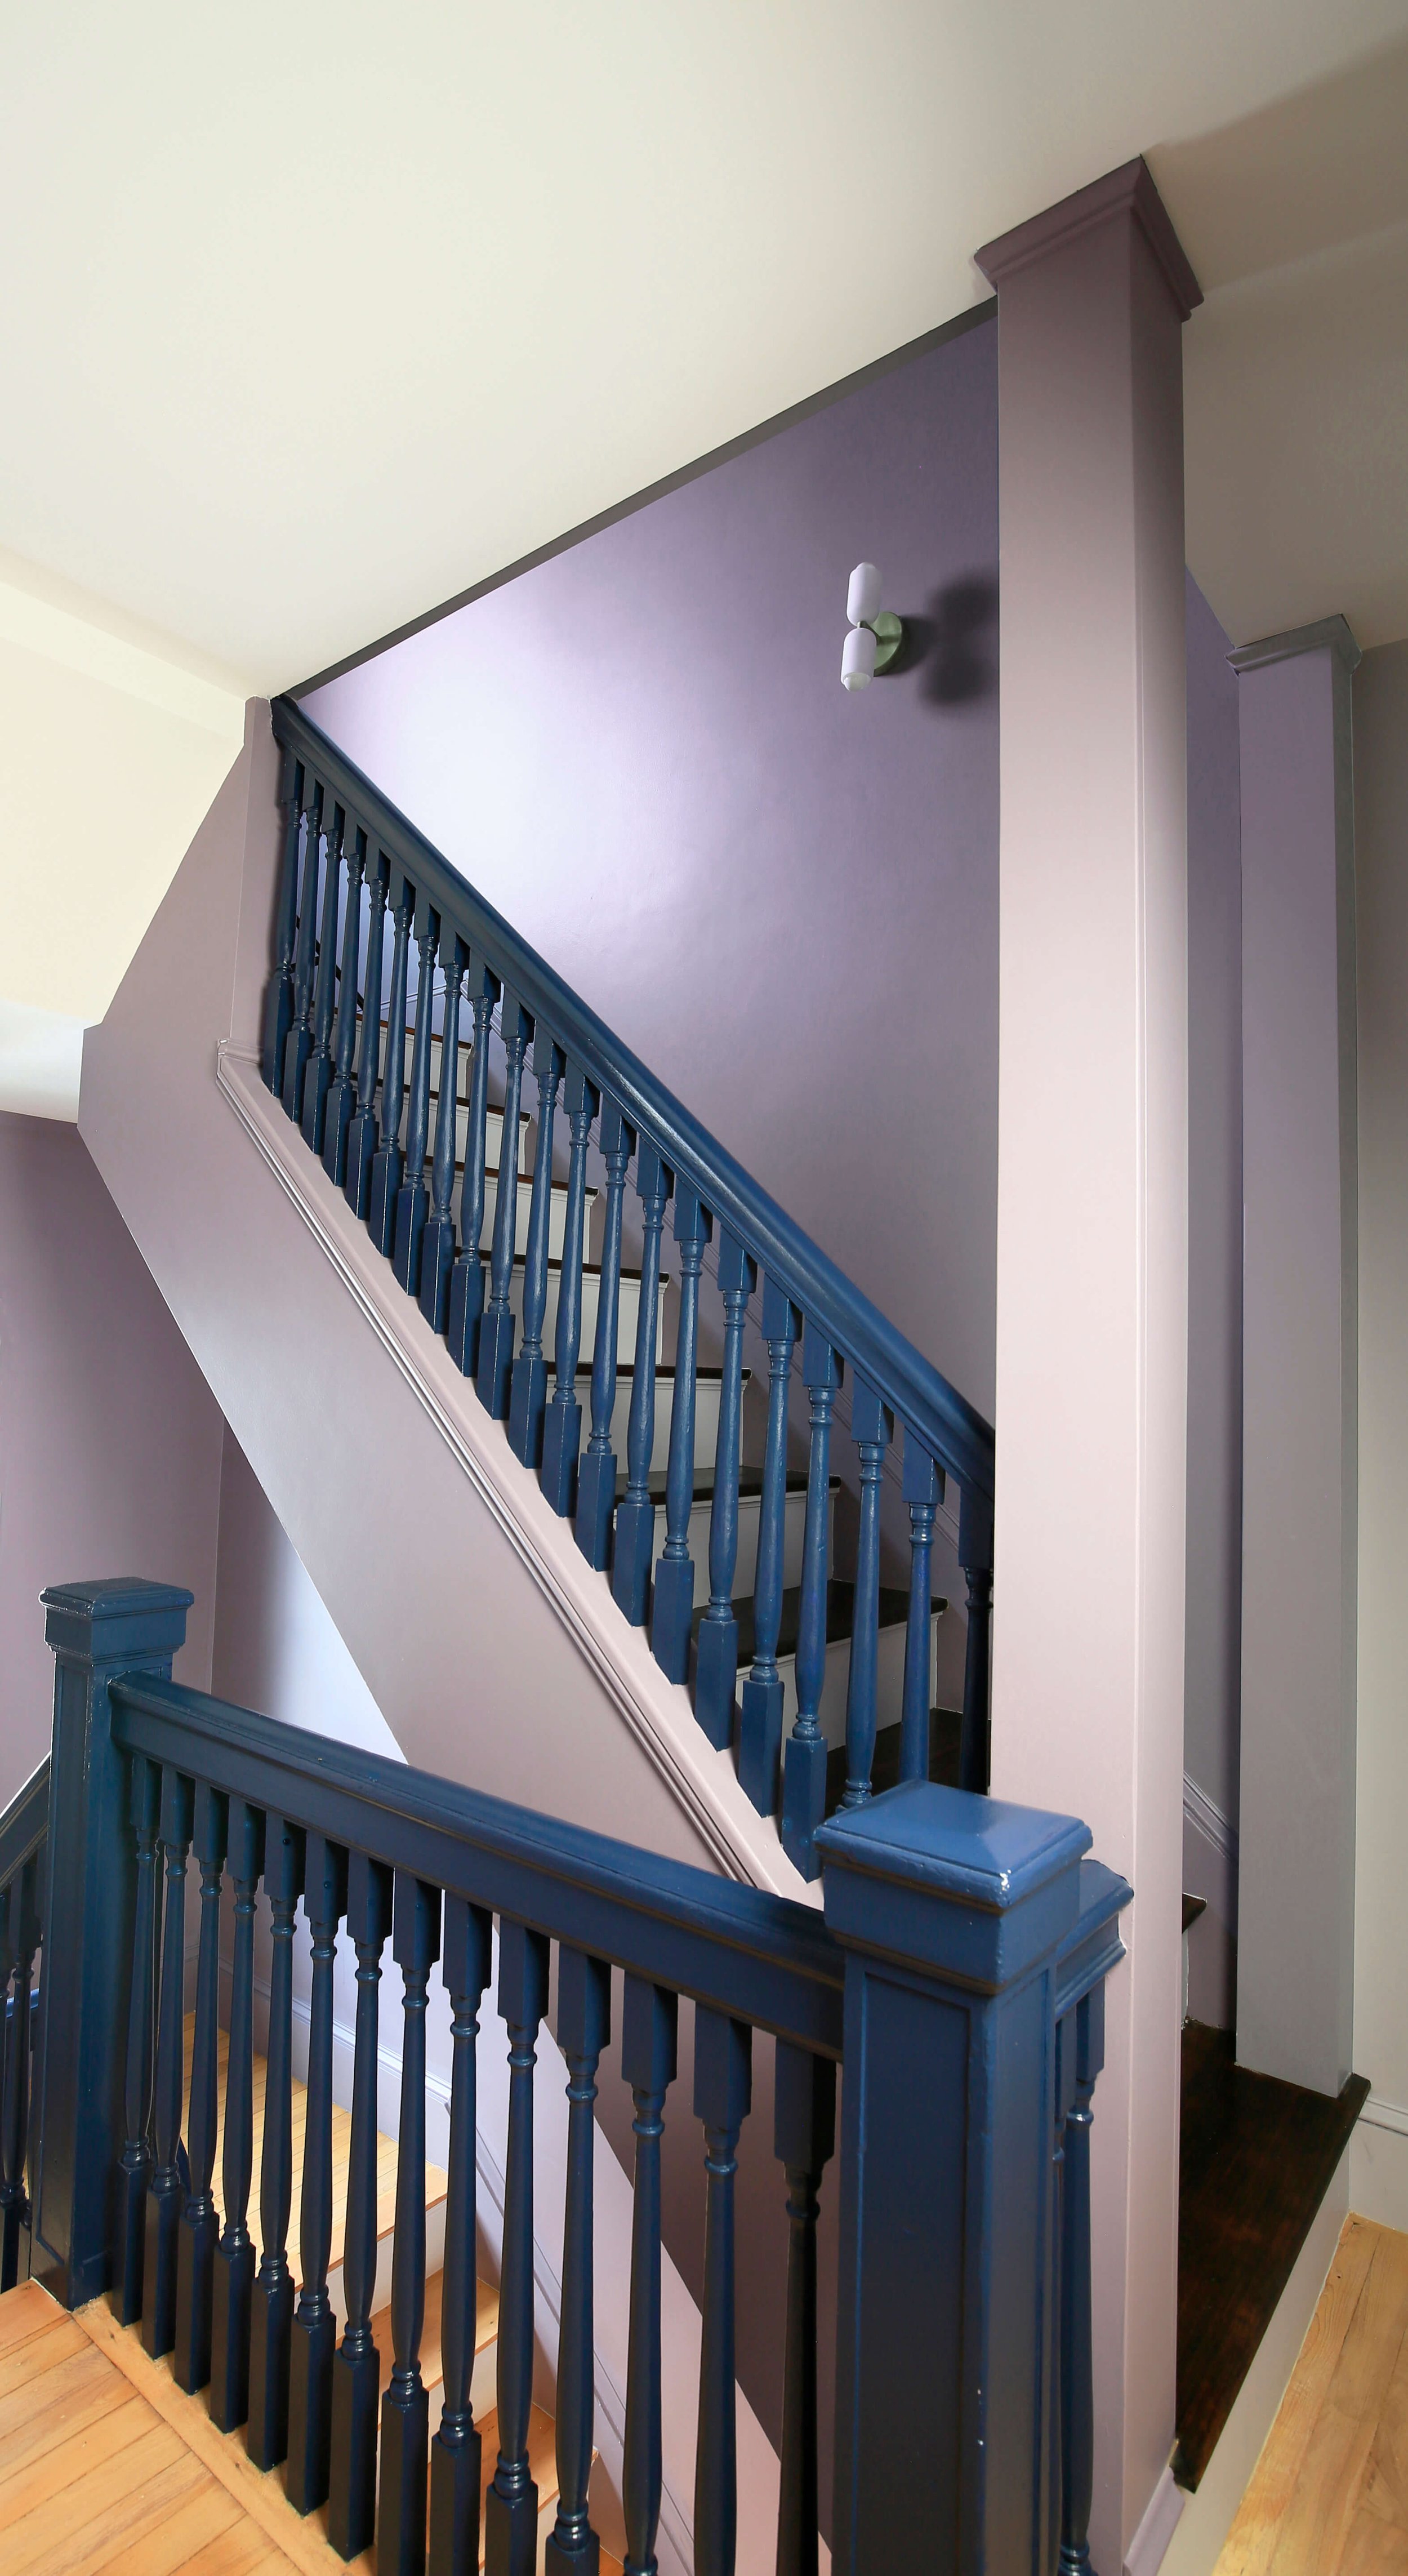 design 2 order julie h sheridan interior design color house residential stair landing hallway.jpg